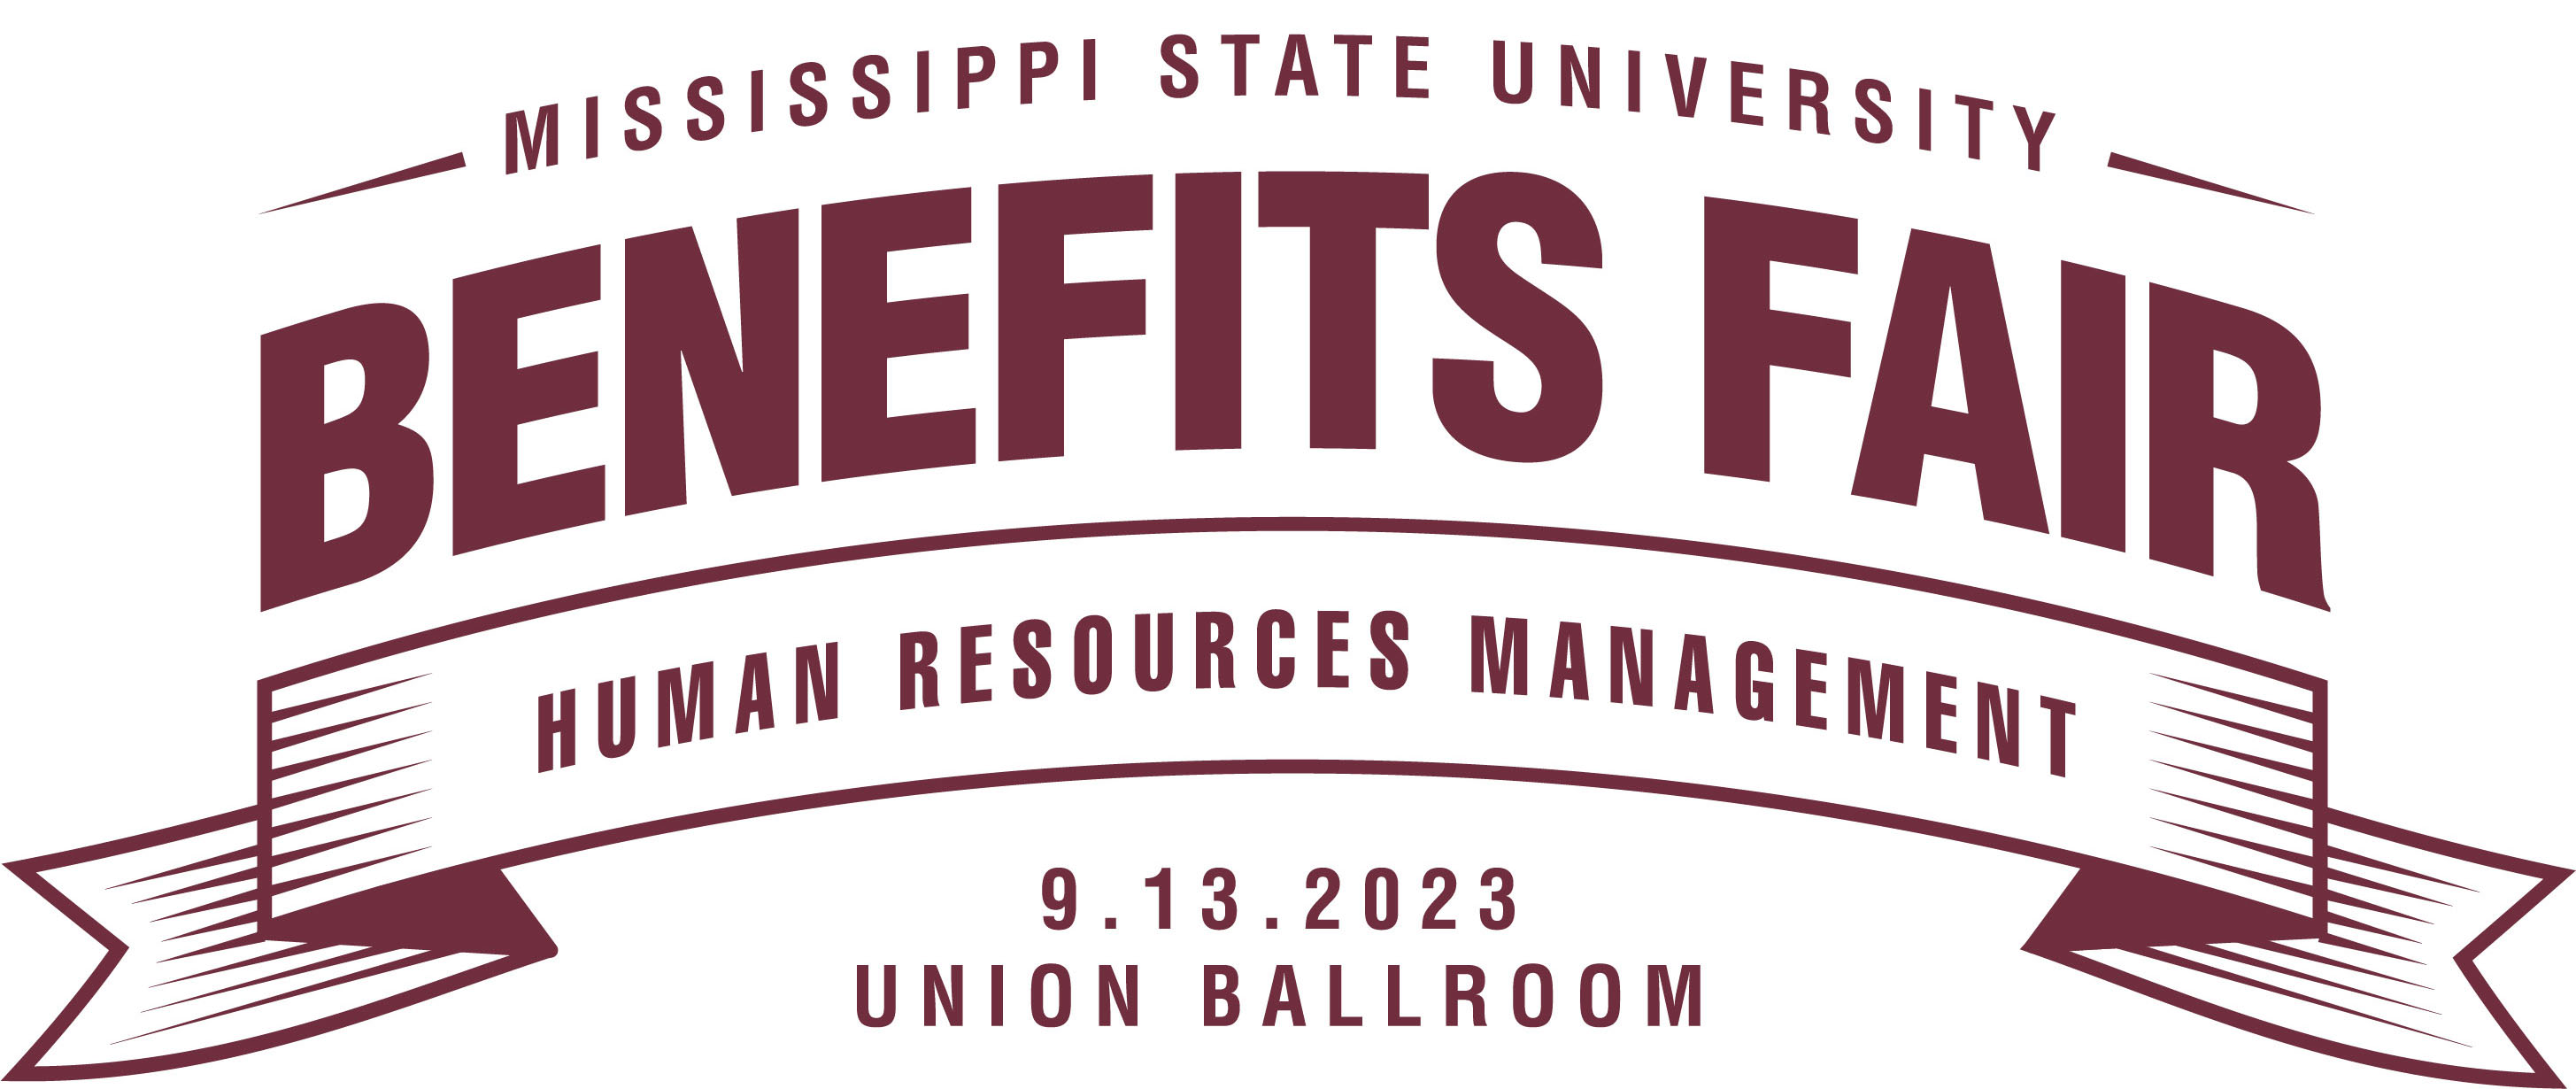 Benefits Fair, September 9, 2023 - Union Ballroom